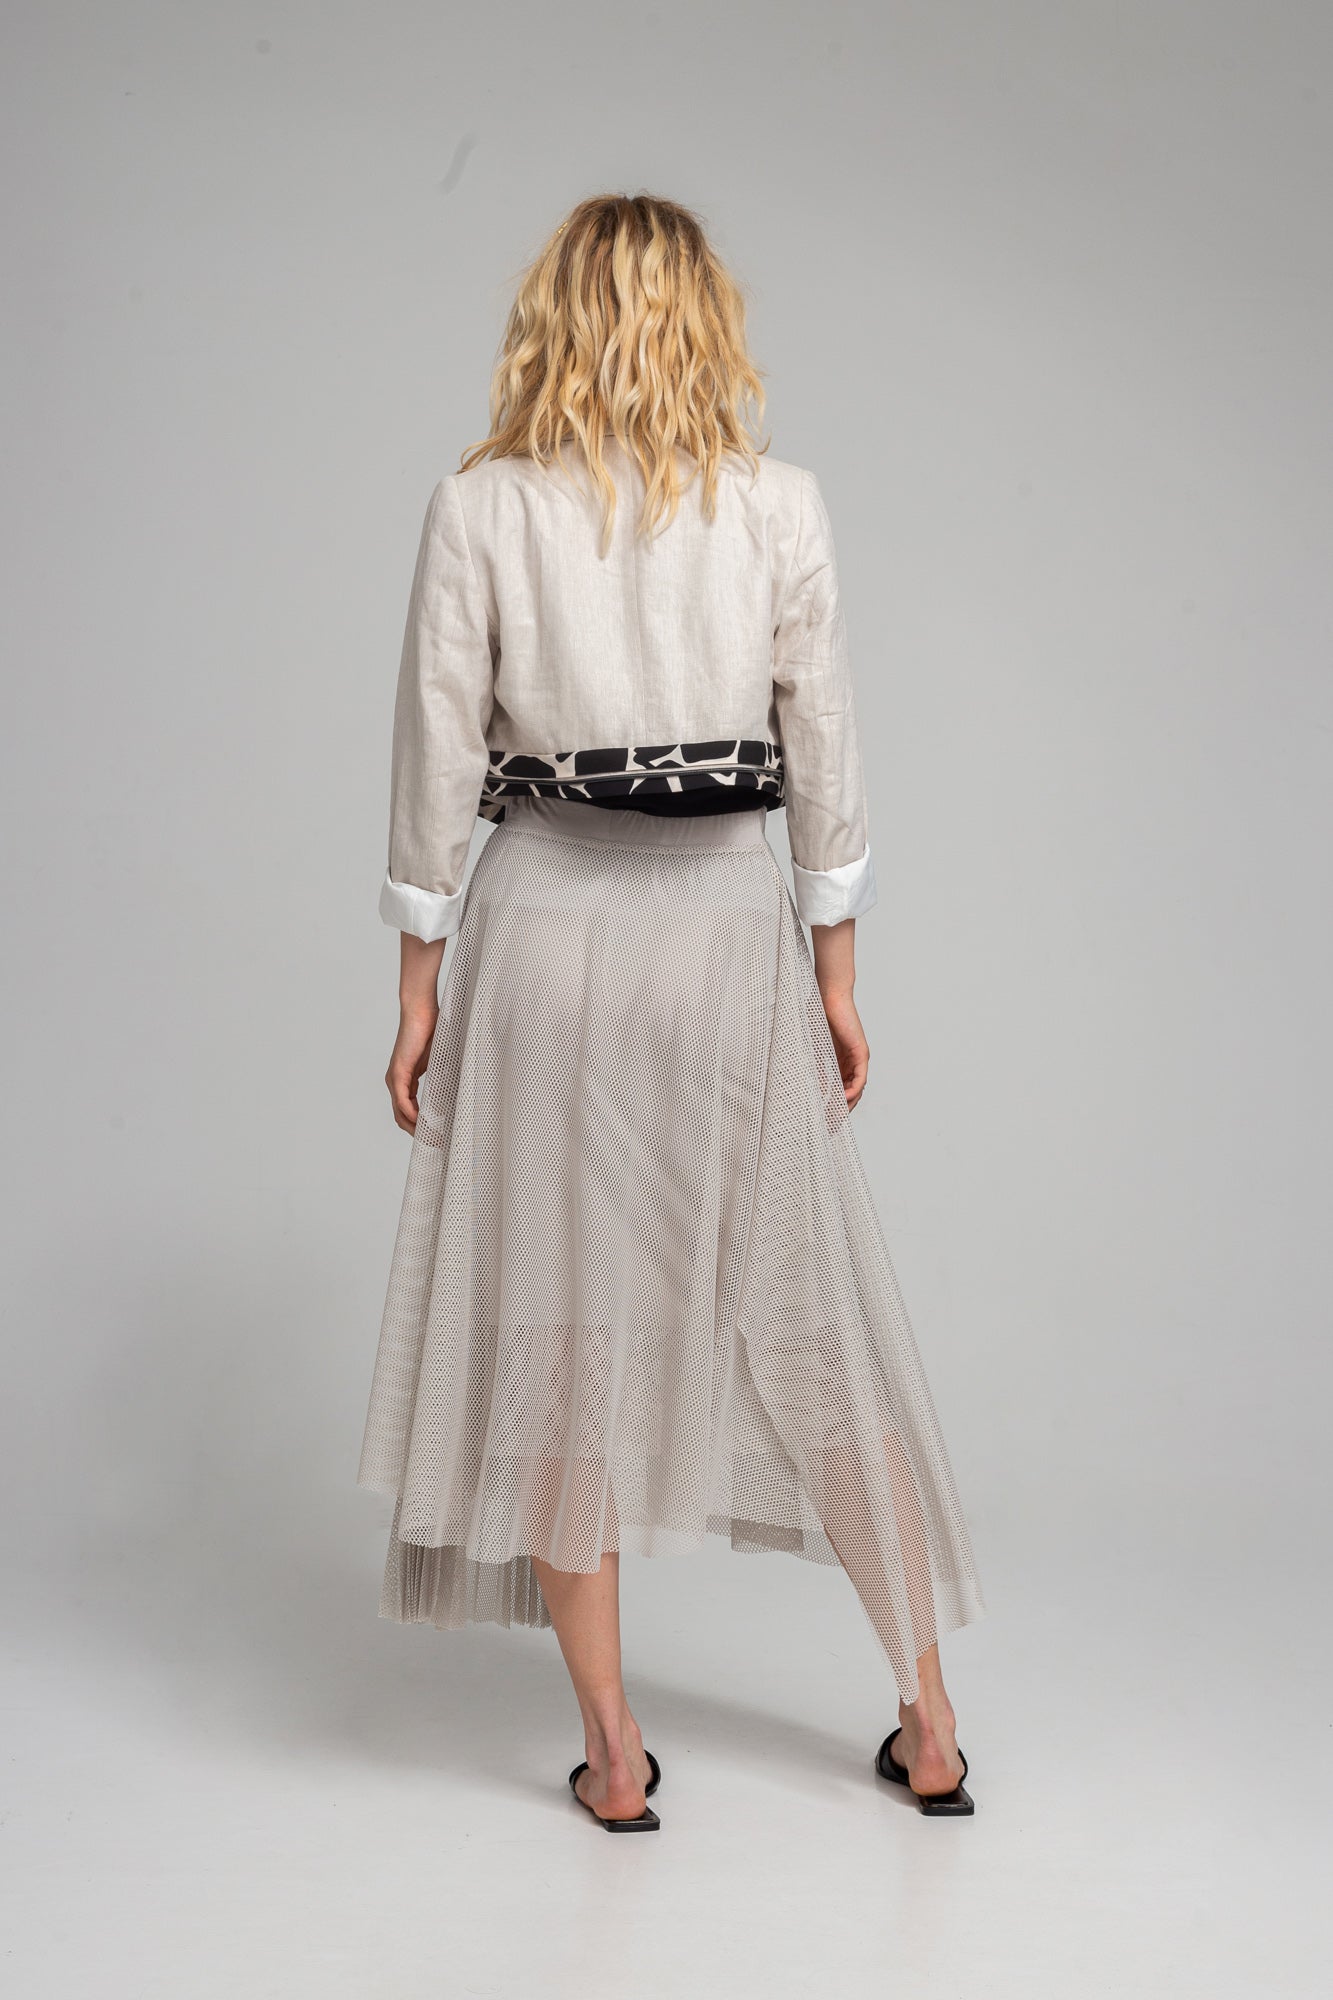 DAWN IVORY mesh pleated skirt